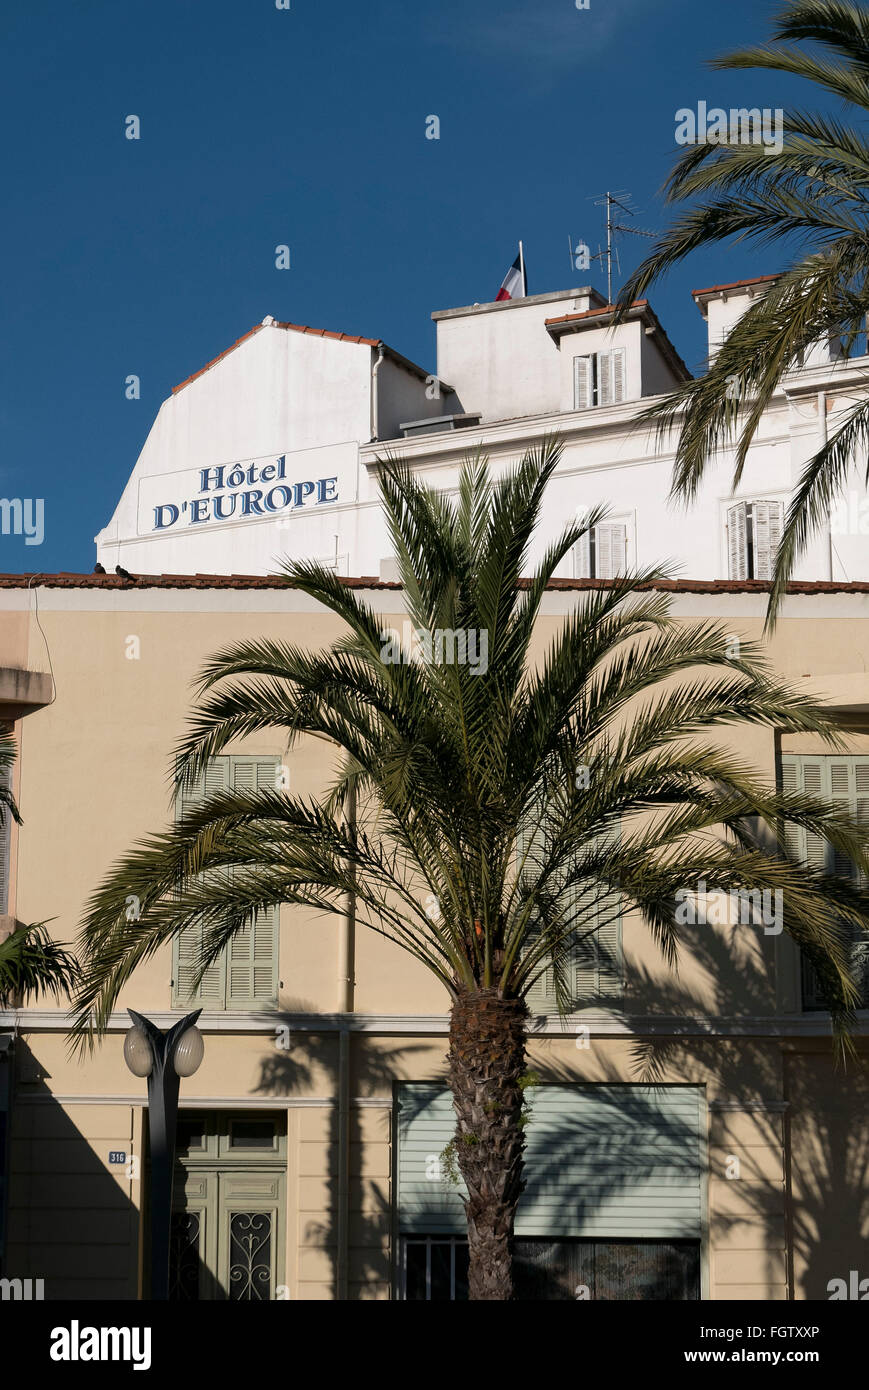 impression with palm tree, Saint-Raphaël, Dep. Var, Côte d'Azur, France Stock Photo